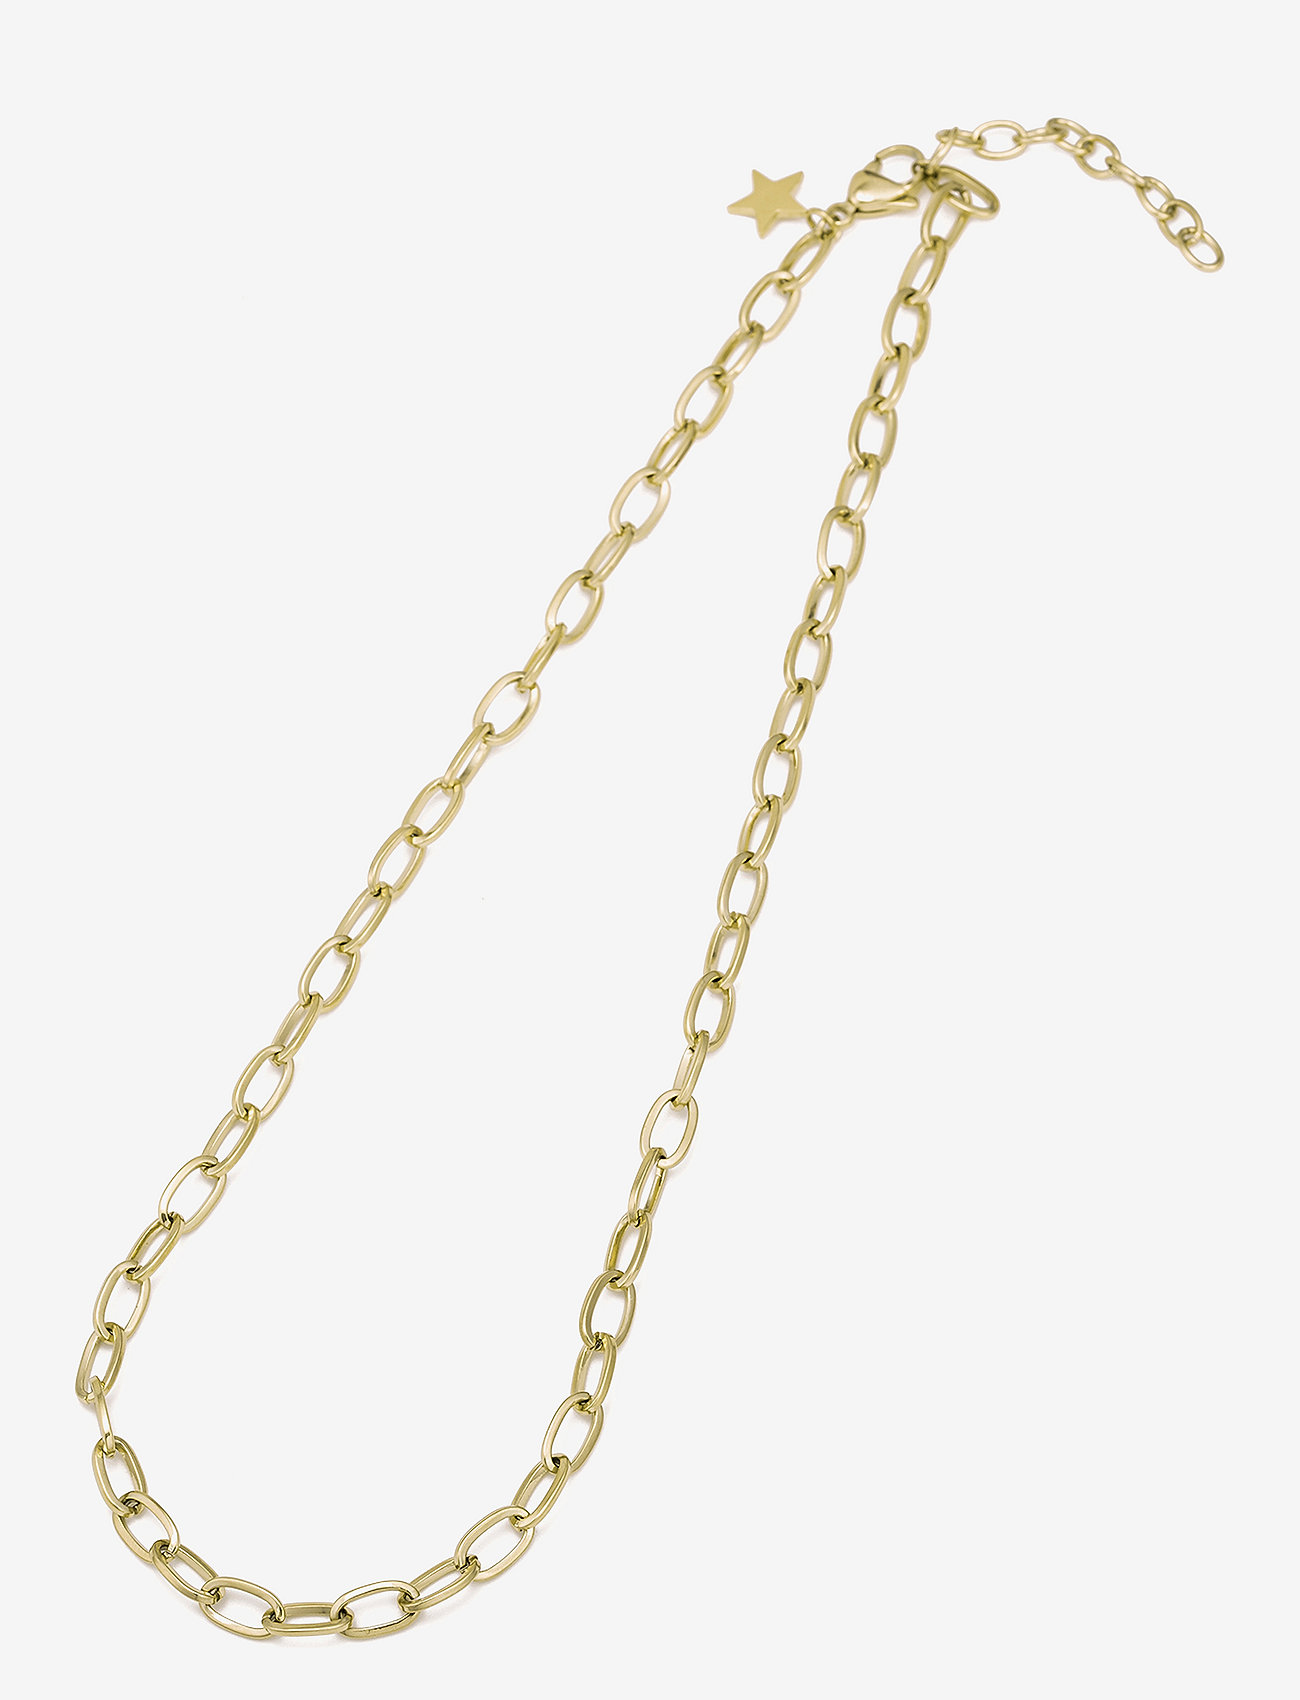 By Jolima - Nancy chain necklace, Gold - gold - 1